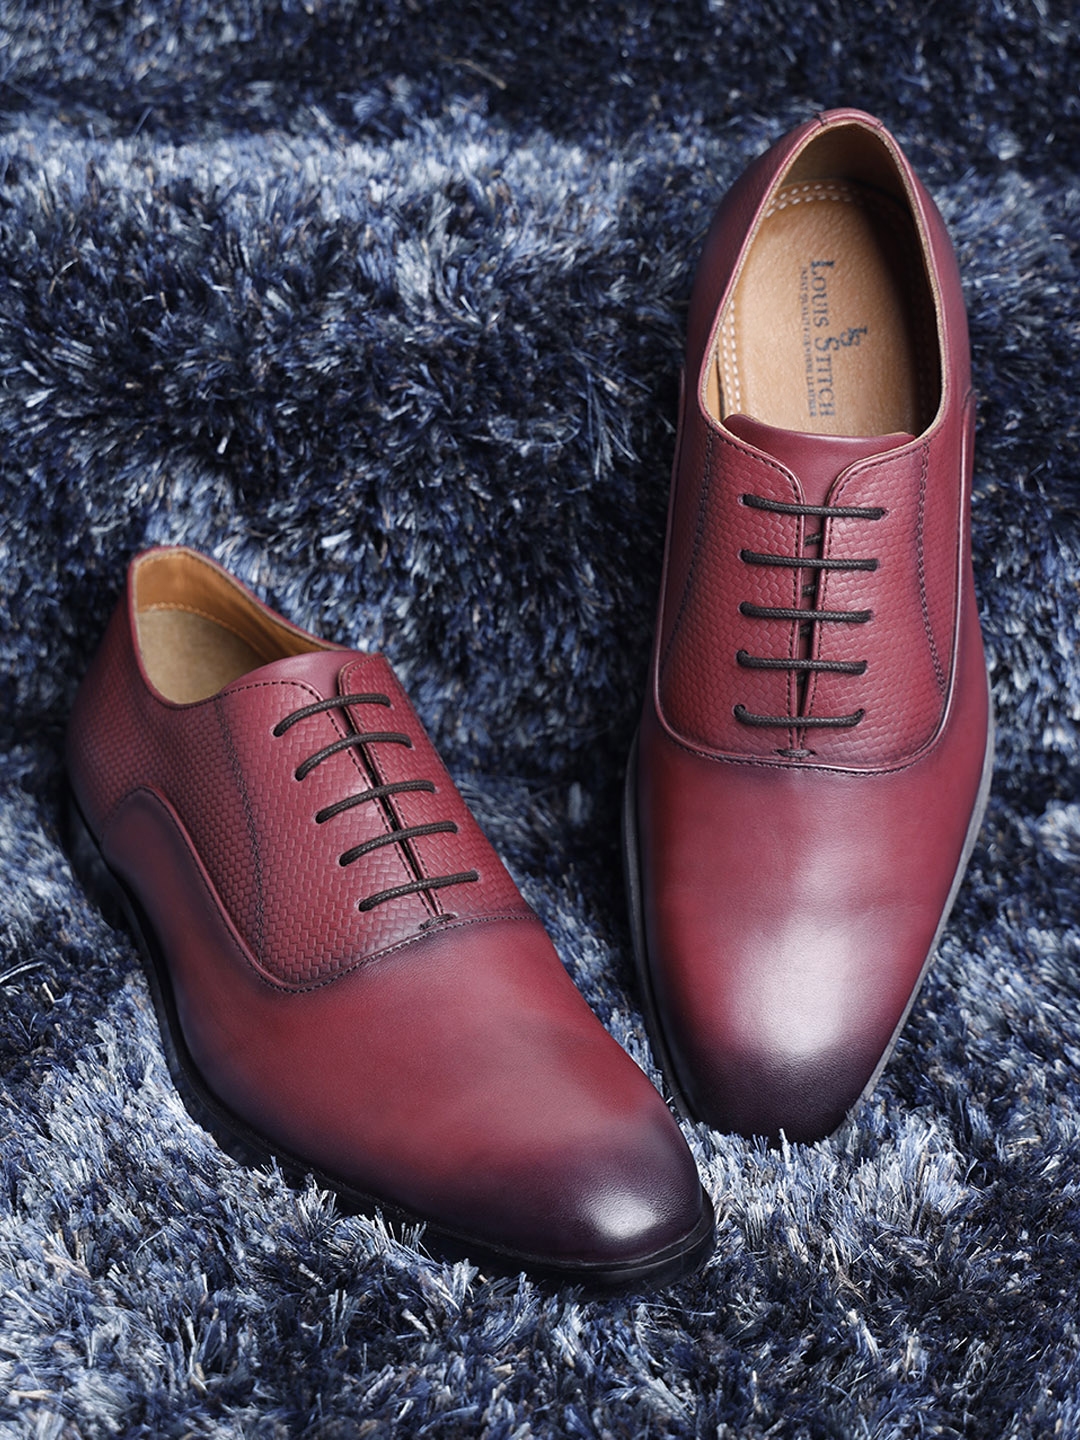 Buy Louis Stitch Men Black Italian Leather Formal Brogues Shoes online